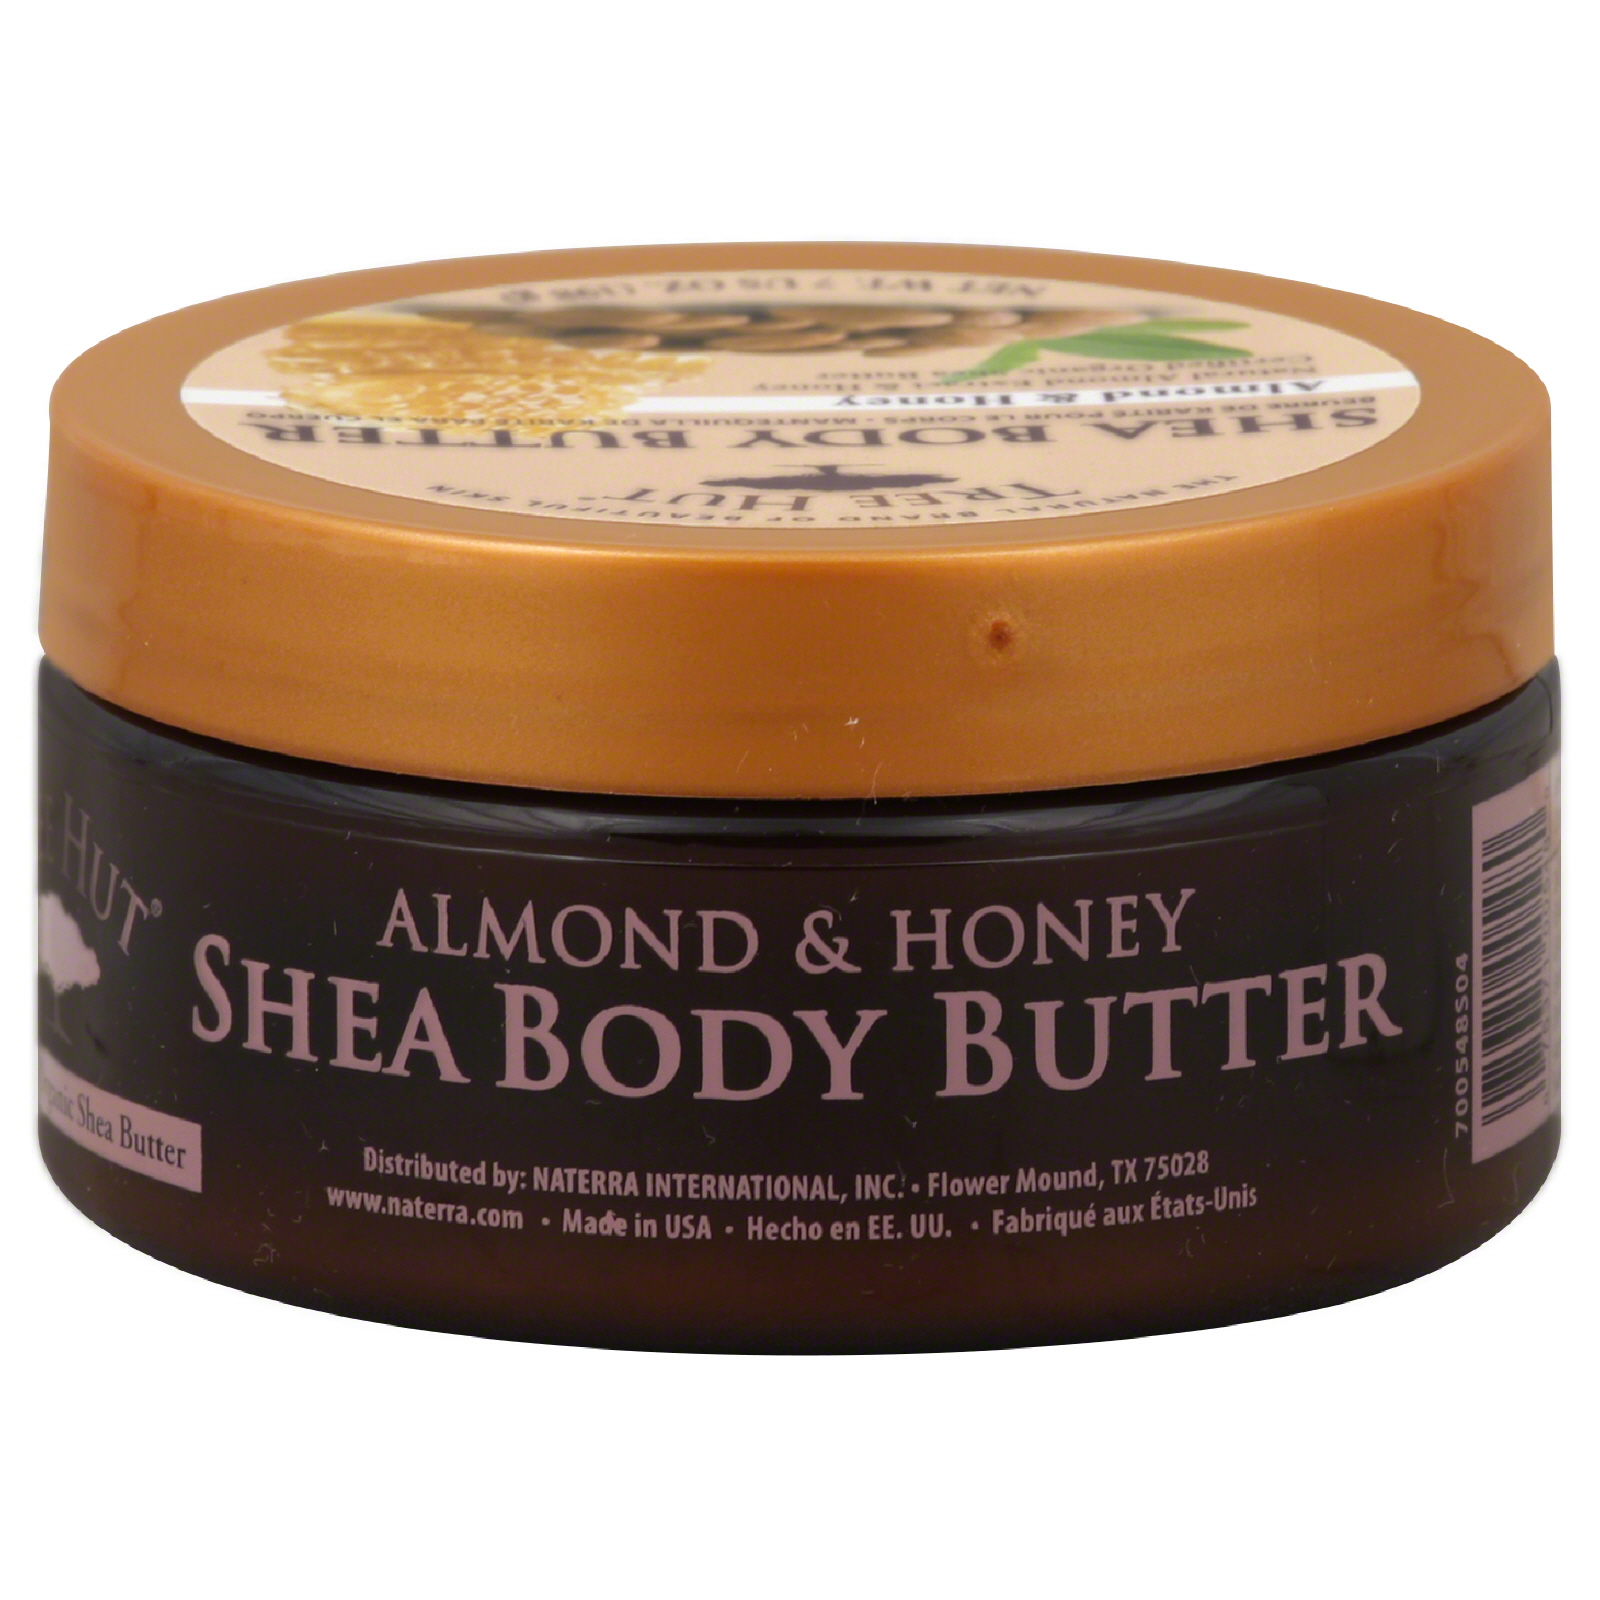 Tree Hut Body Butter, Shea, Almond & Honey, 7 oz (198 g)